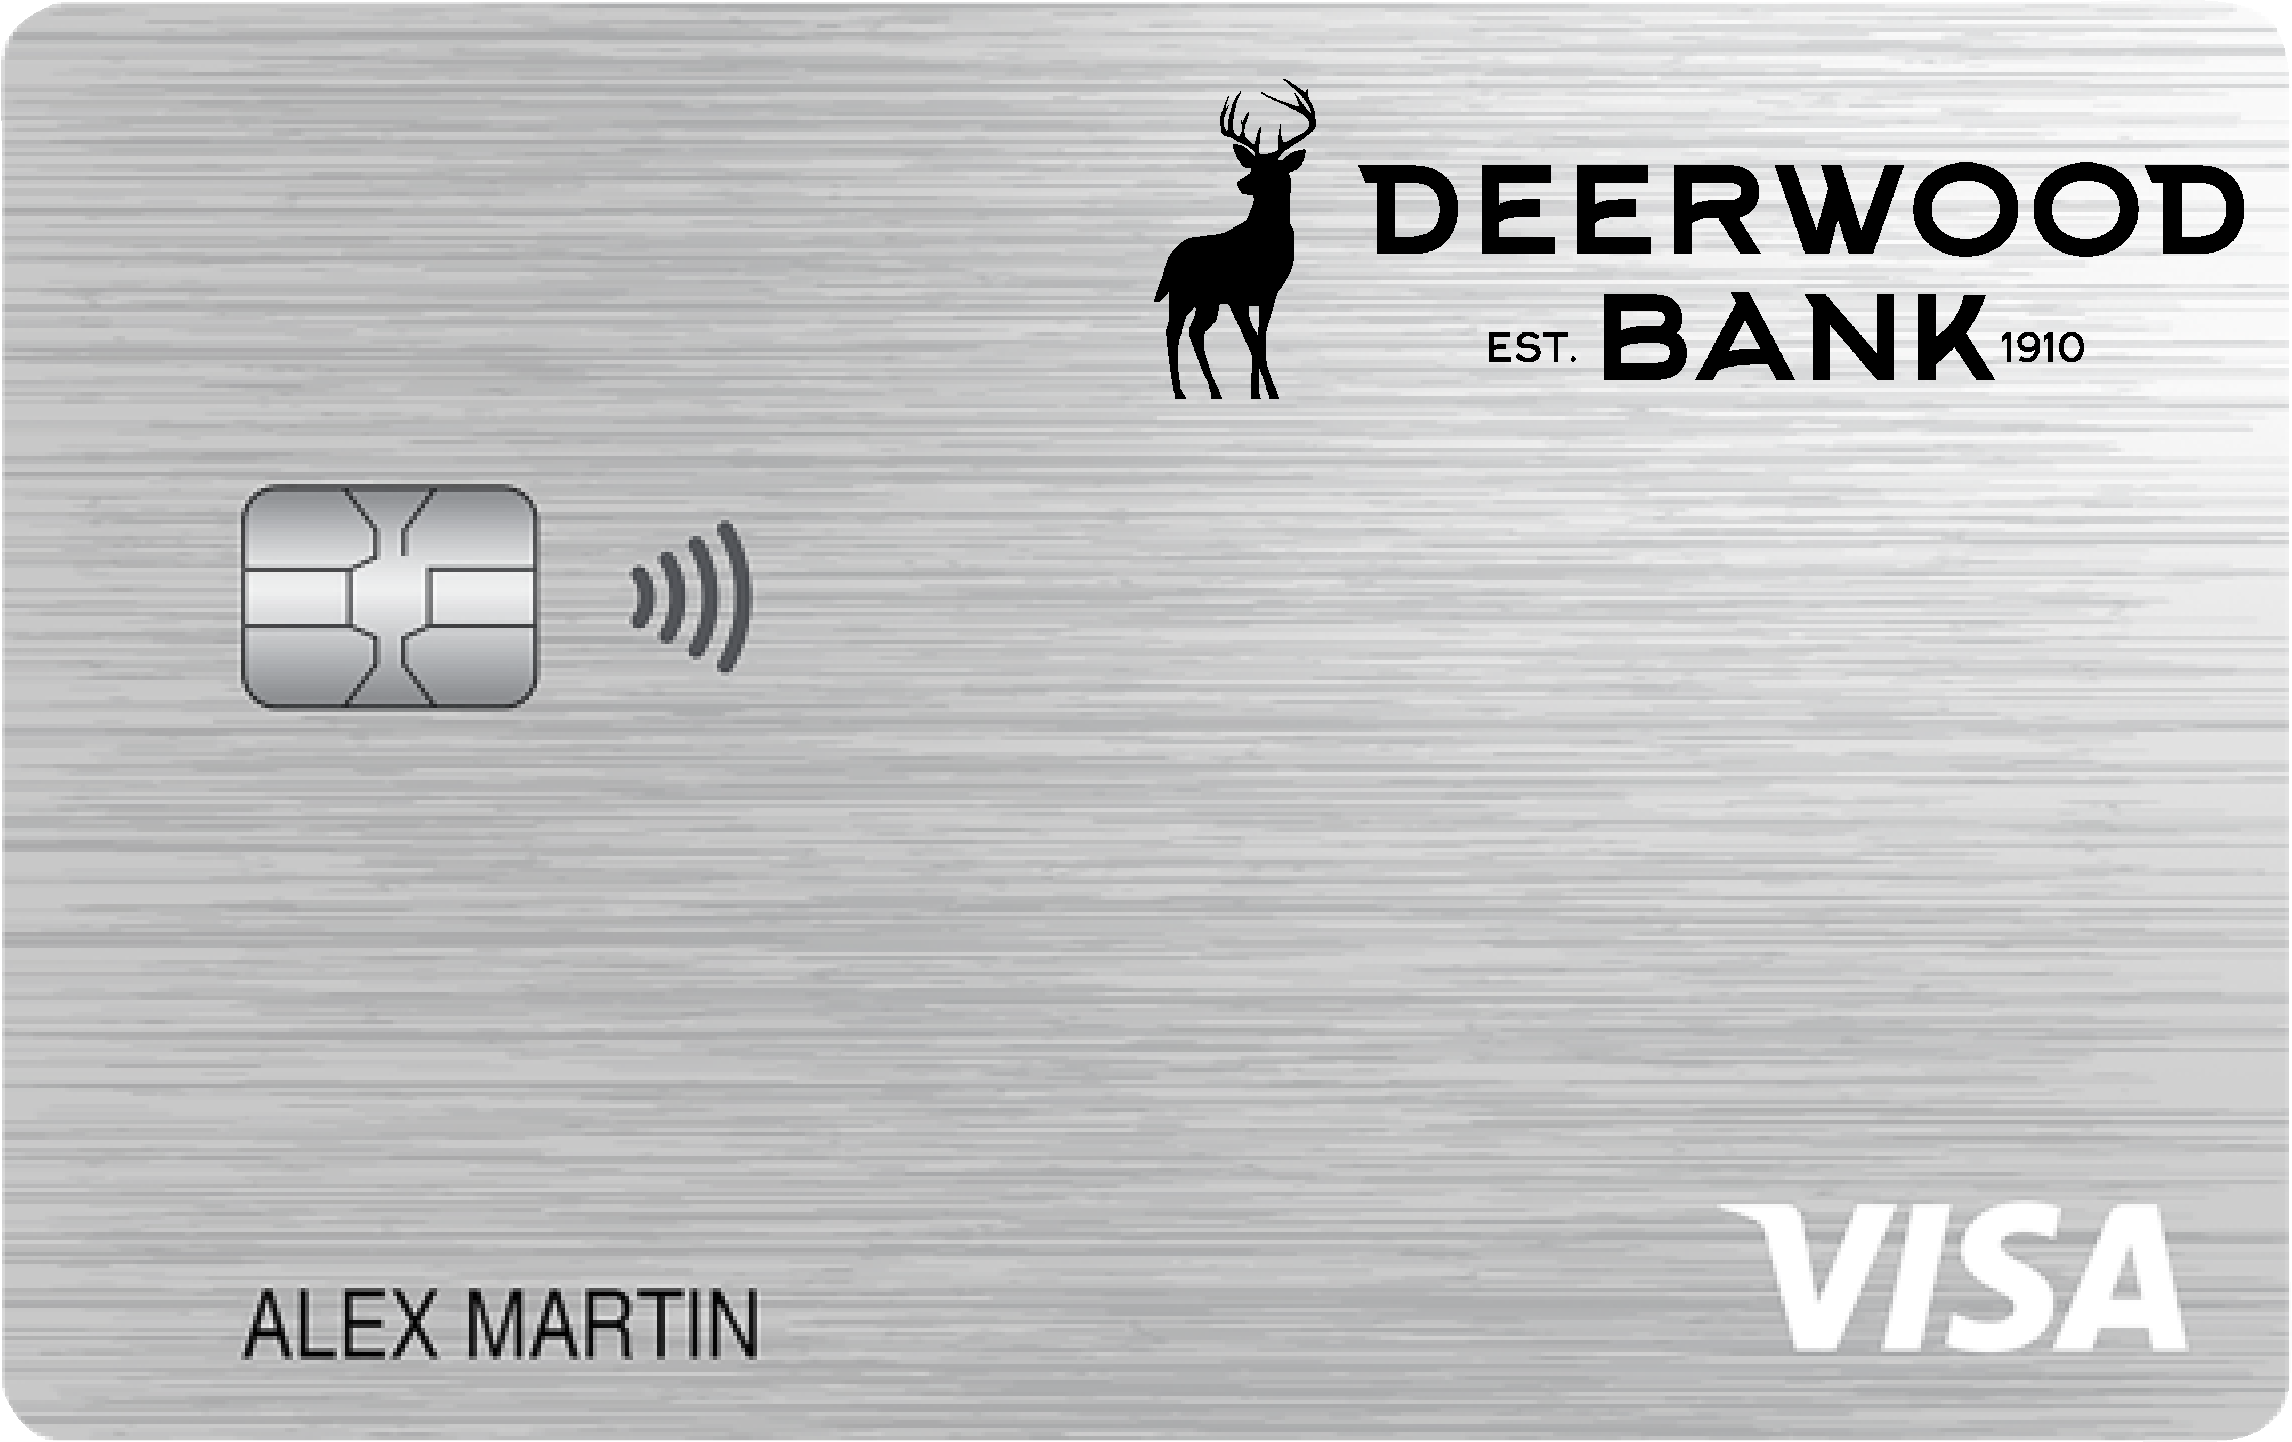 Deerwood Bank Platinum Card